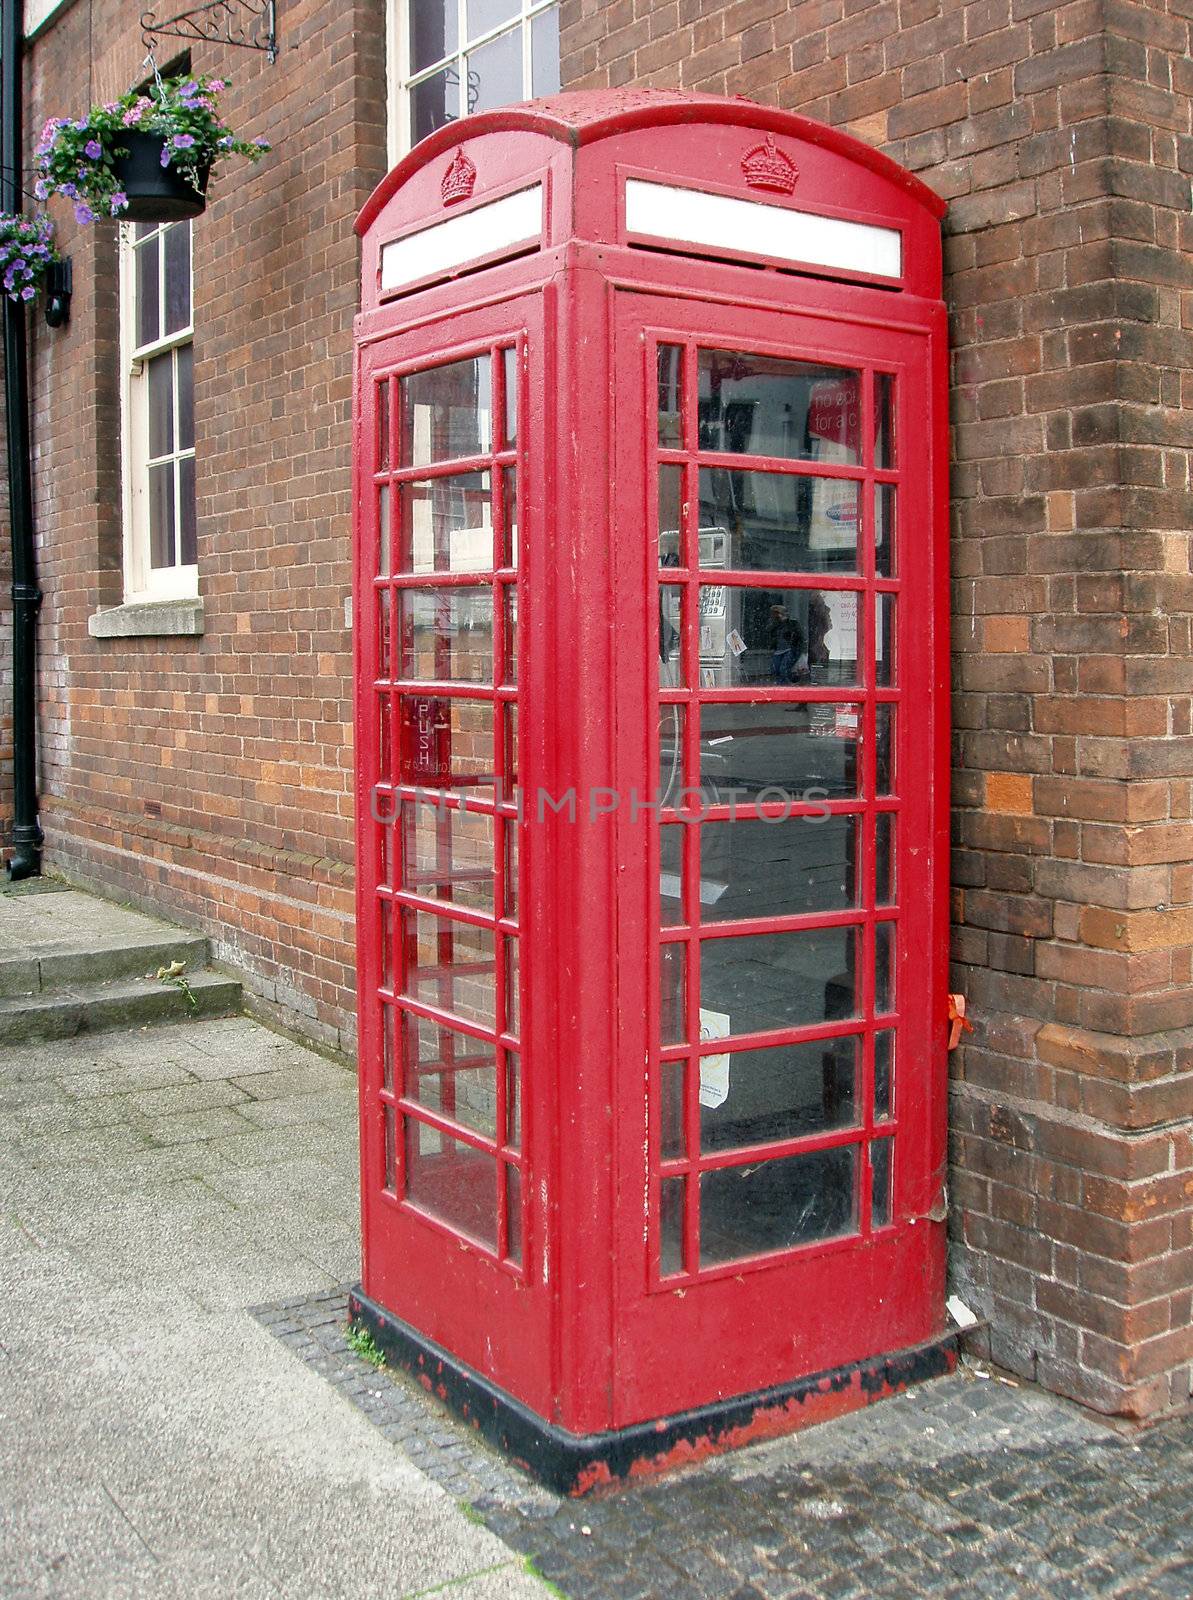 Telephone boot, UK by jol66